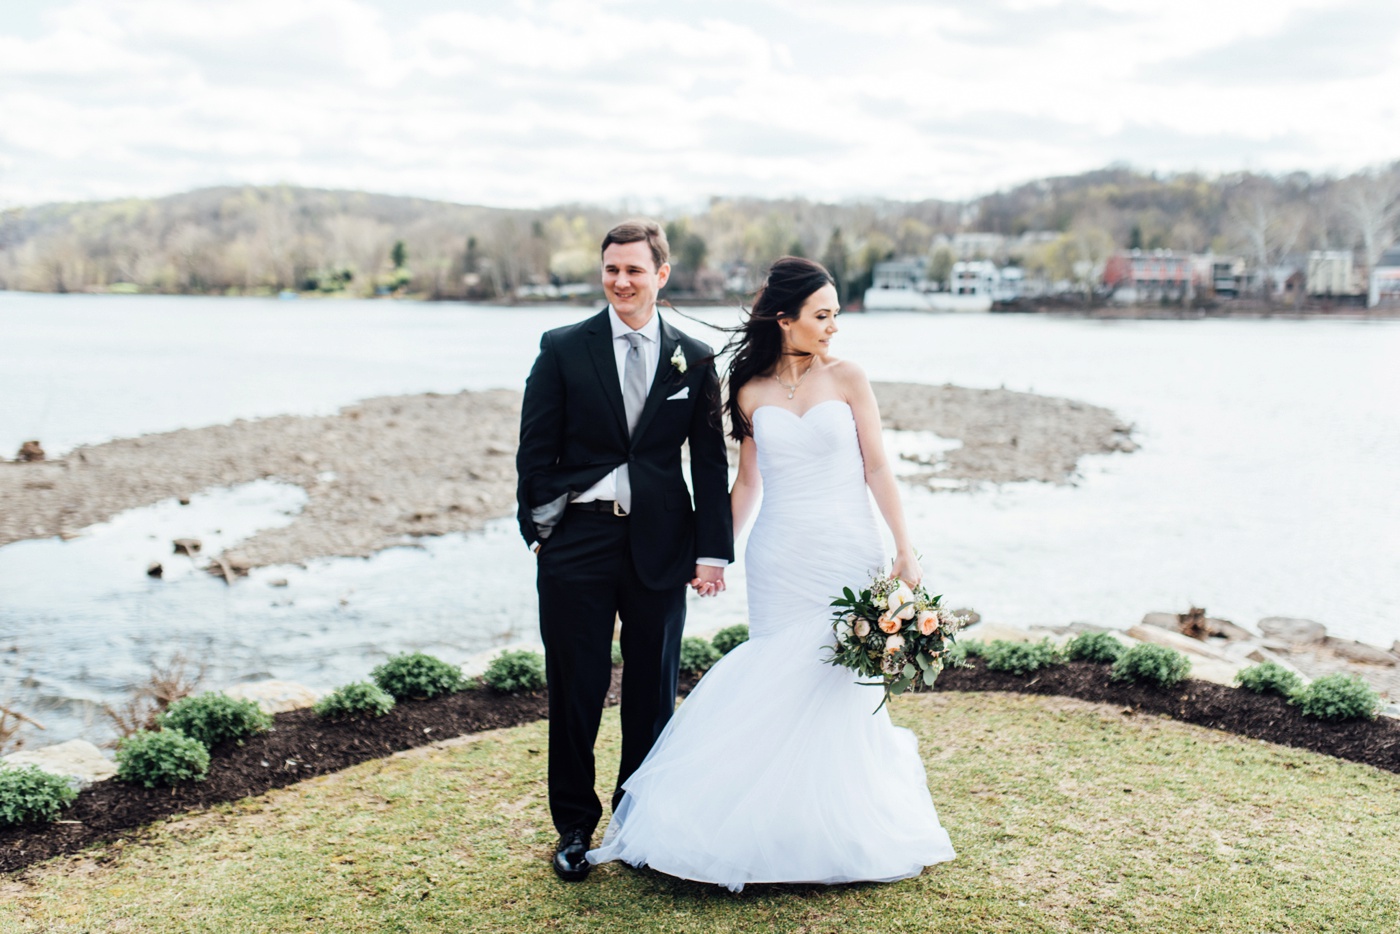 Melissa + Tom - Lambertville Station Inn Wedding - New Jersey Wedding Photographer - Alison Dunn Photography photo